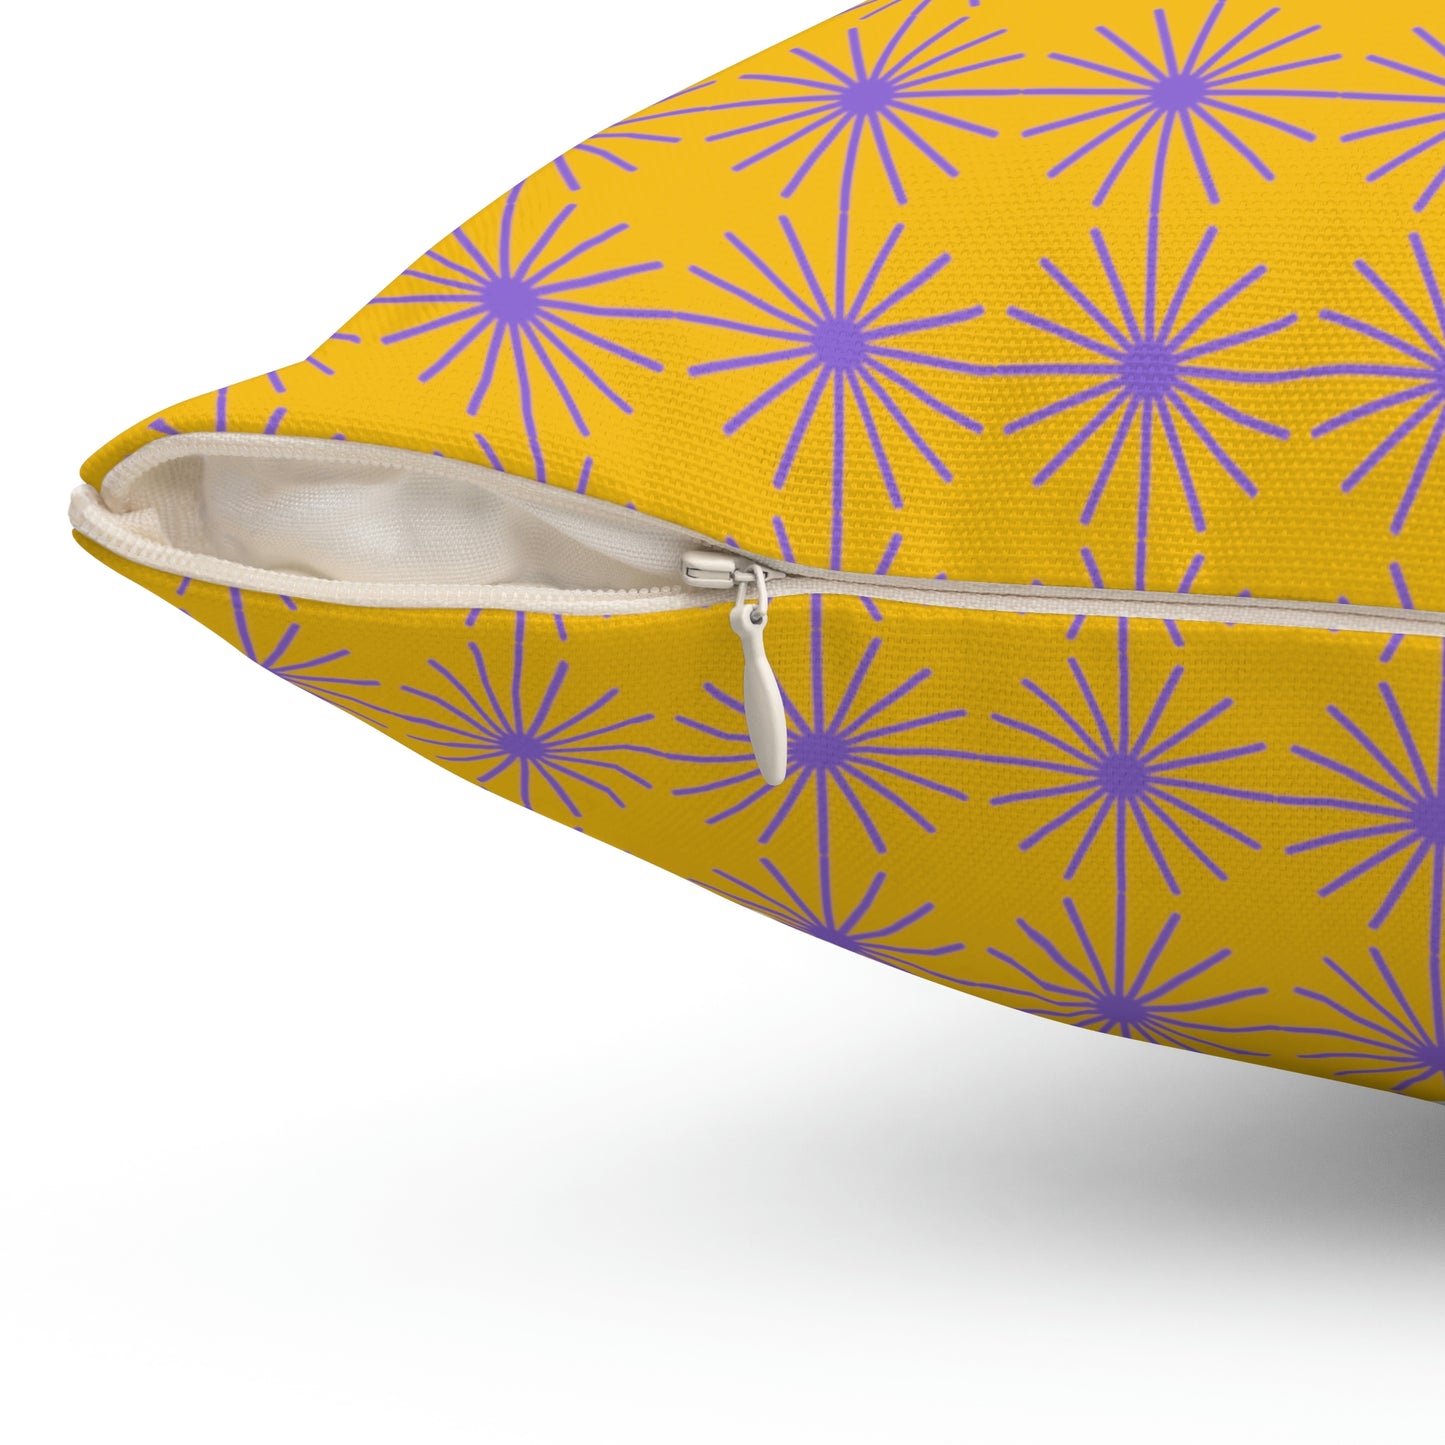 Spun Polyester Square Pillow Case “Purple Flower on Yellow”